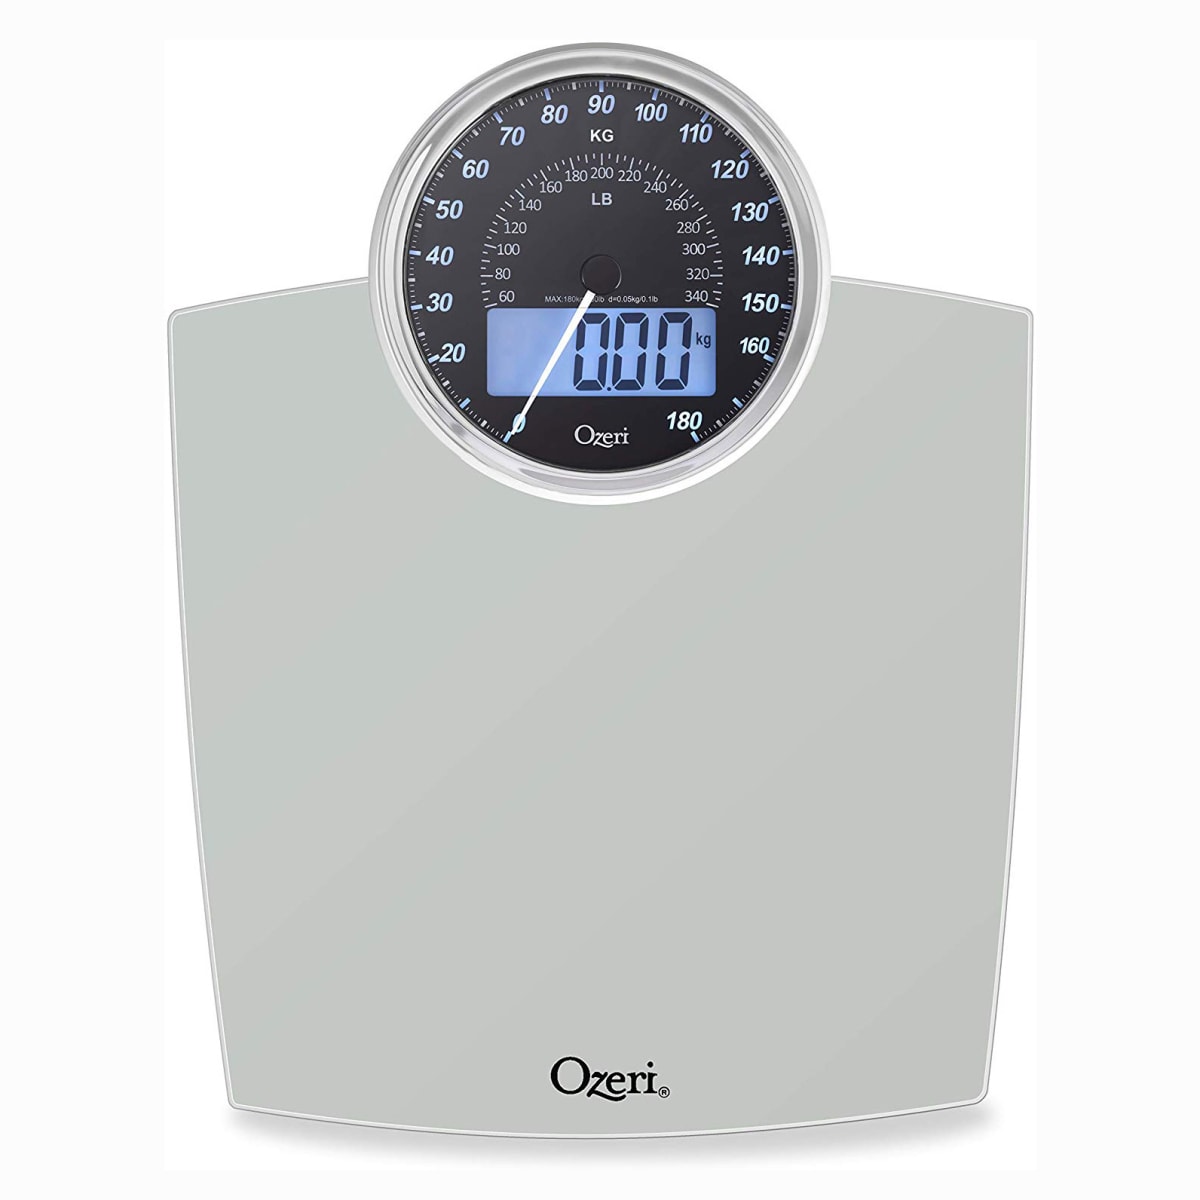 Tanita HD-351 Digital Weight Scale